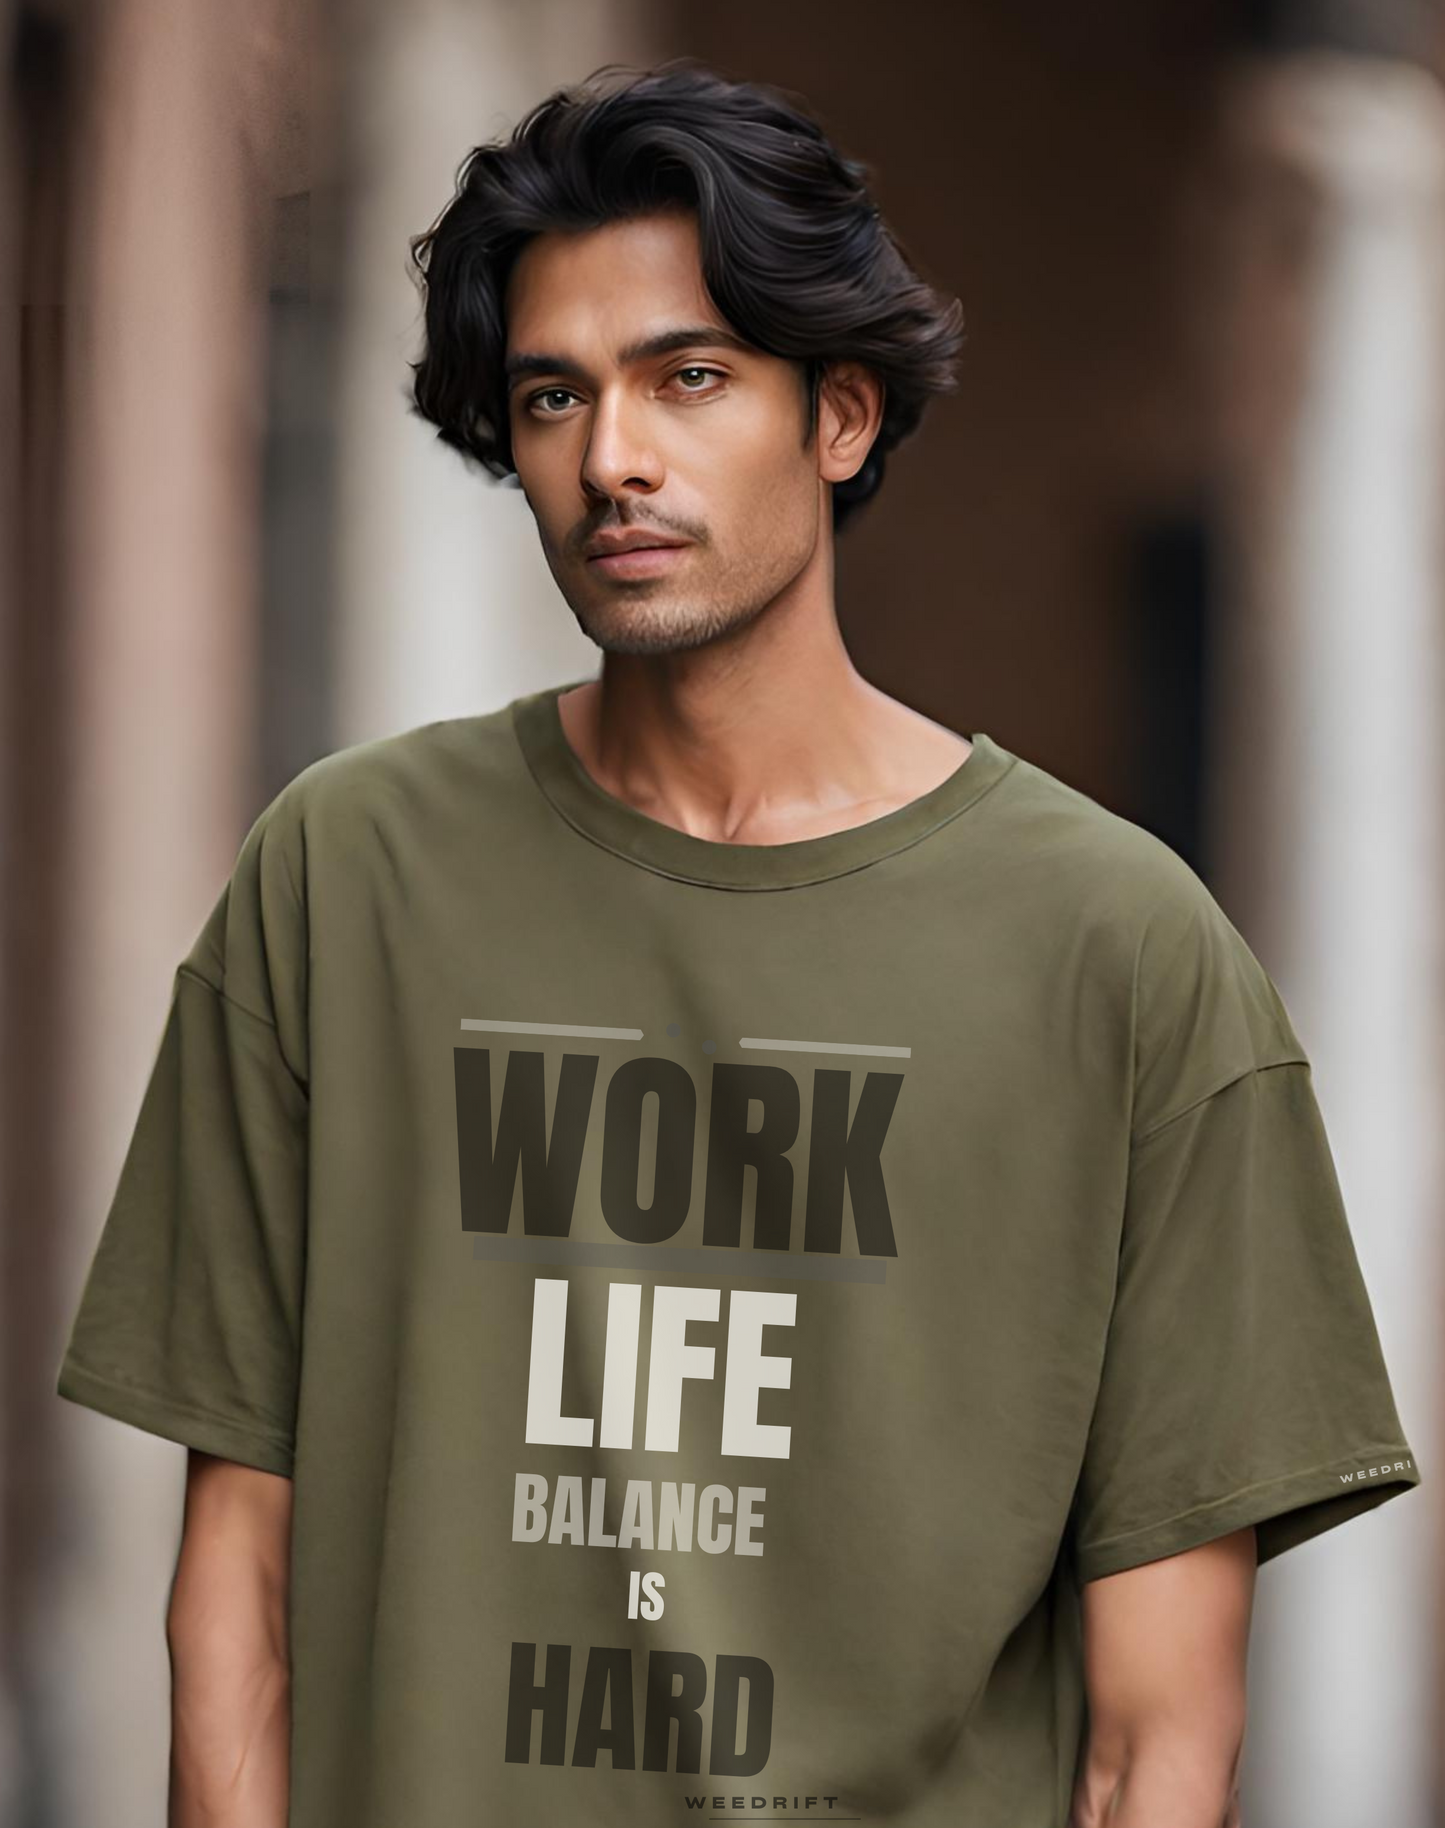 "Work life balance" Oversized Fit T-shirt